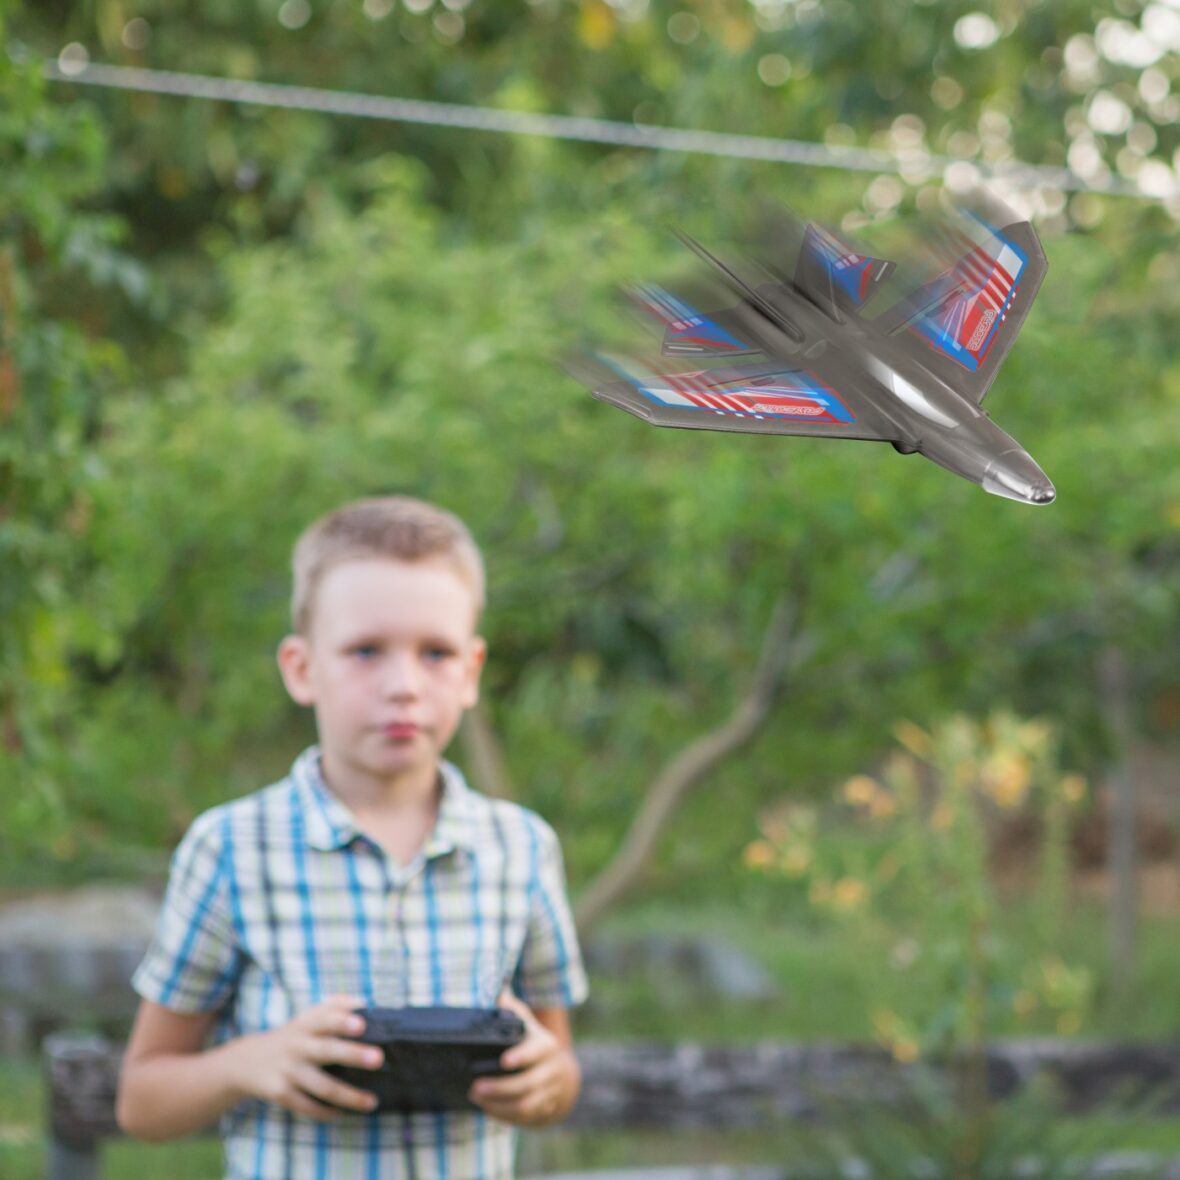 Kid flying drone. Boy operate drones